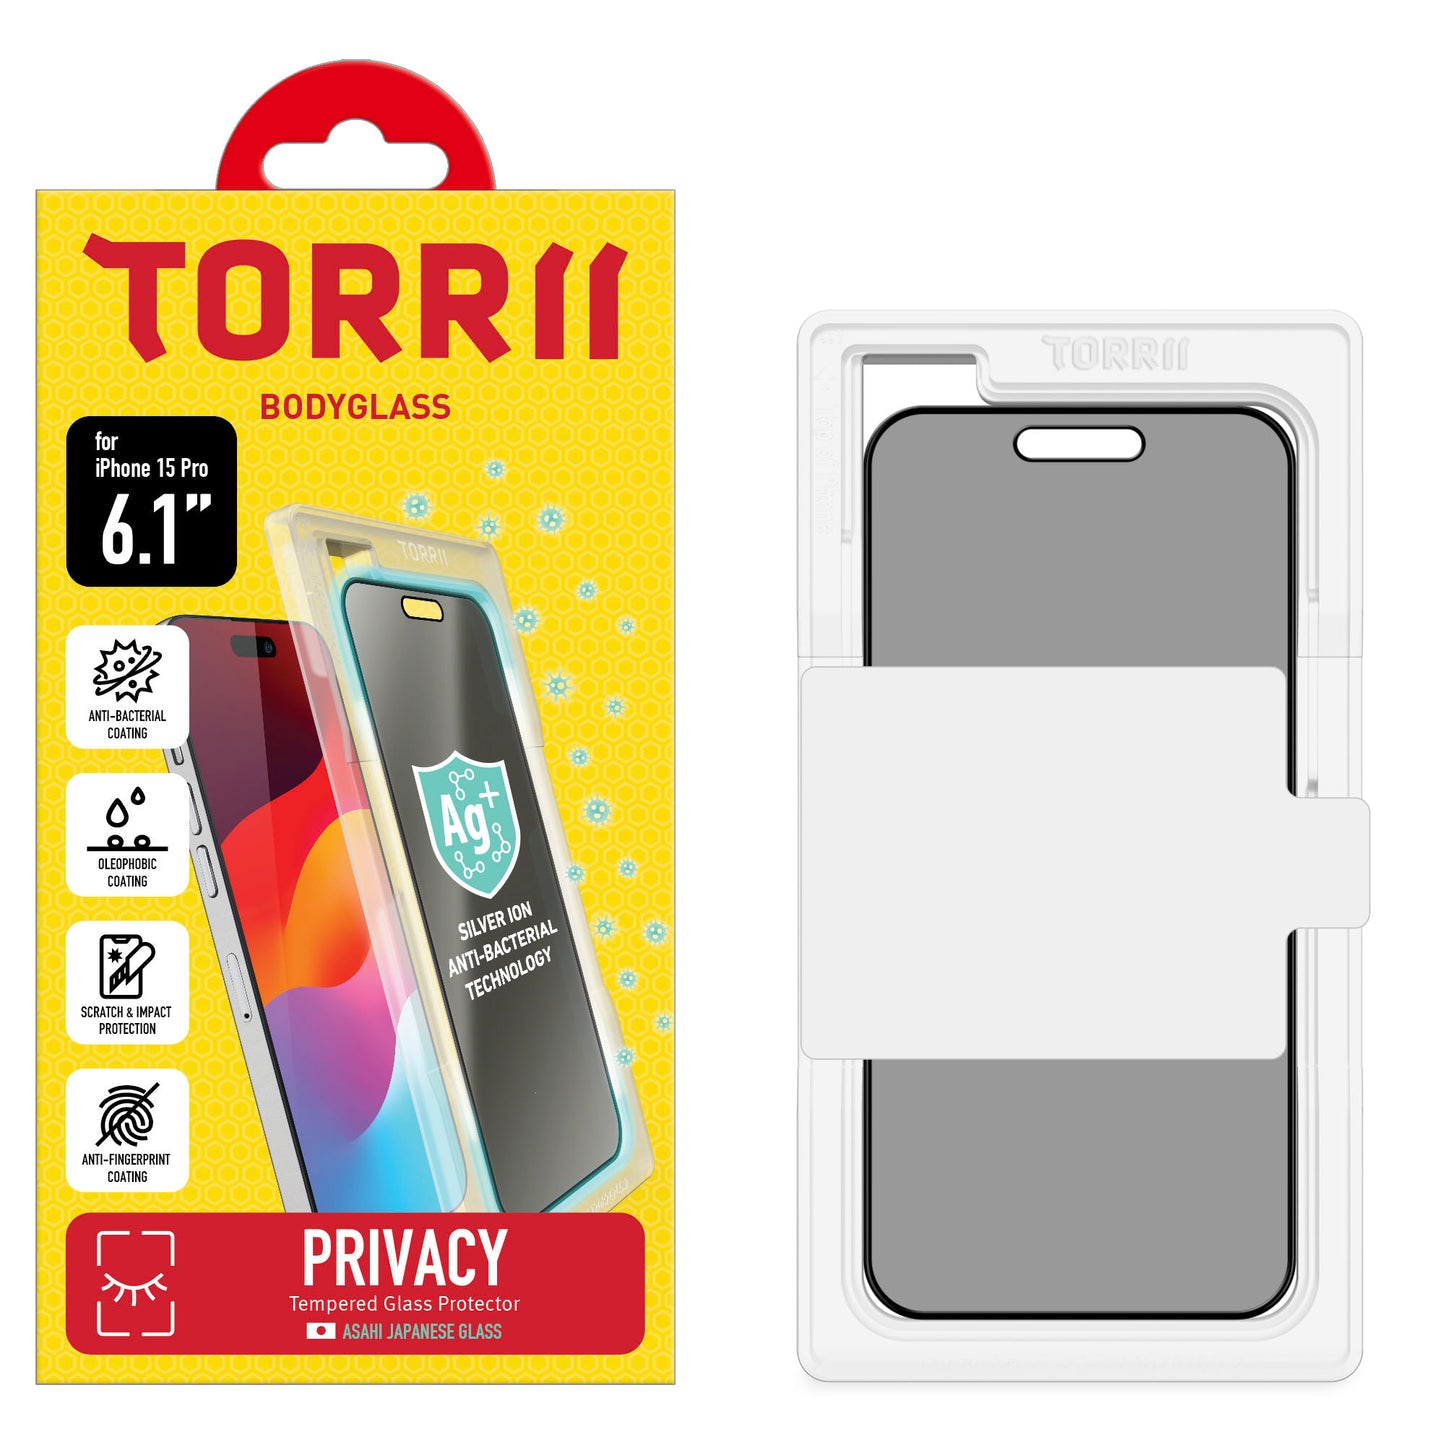 Torrii BODYGLASS 抗菌塗層防窺玻璃保護貼 for iPhone 15 Pro